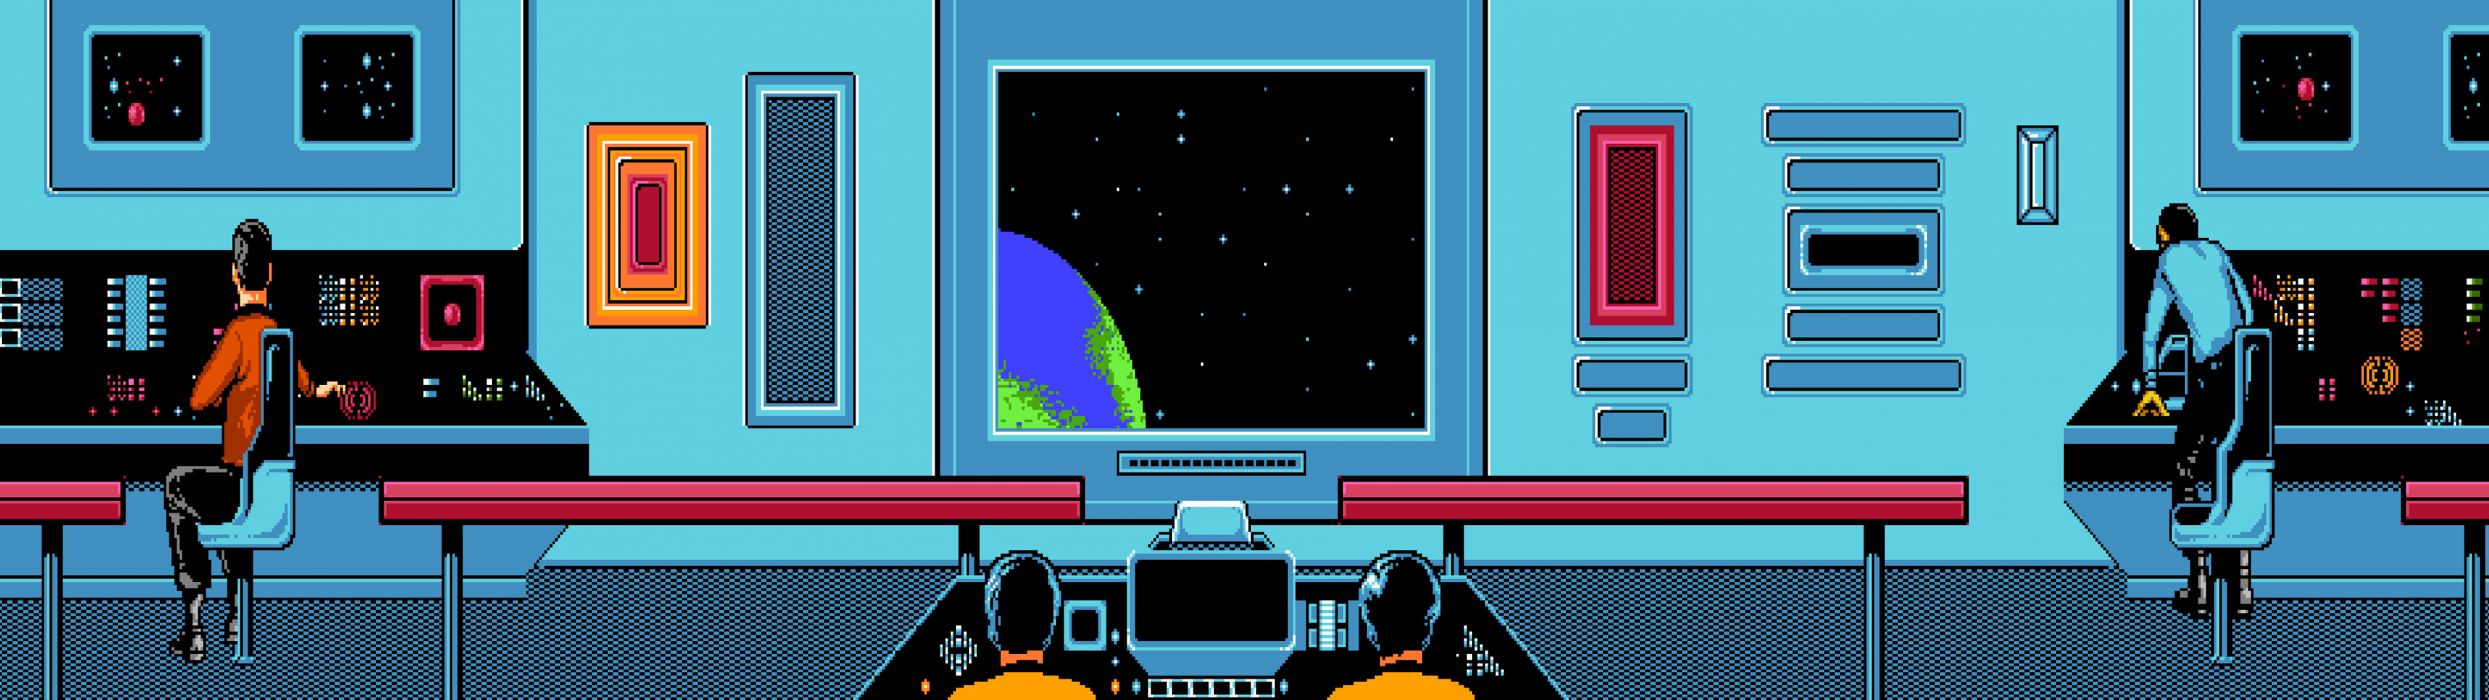 Multi Monitor Dual Screen video games retro classic sci fi science spaceship spacecrafts wallpaperx1080